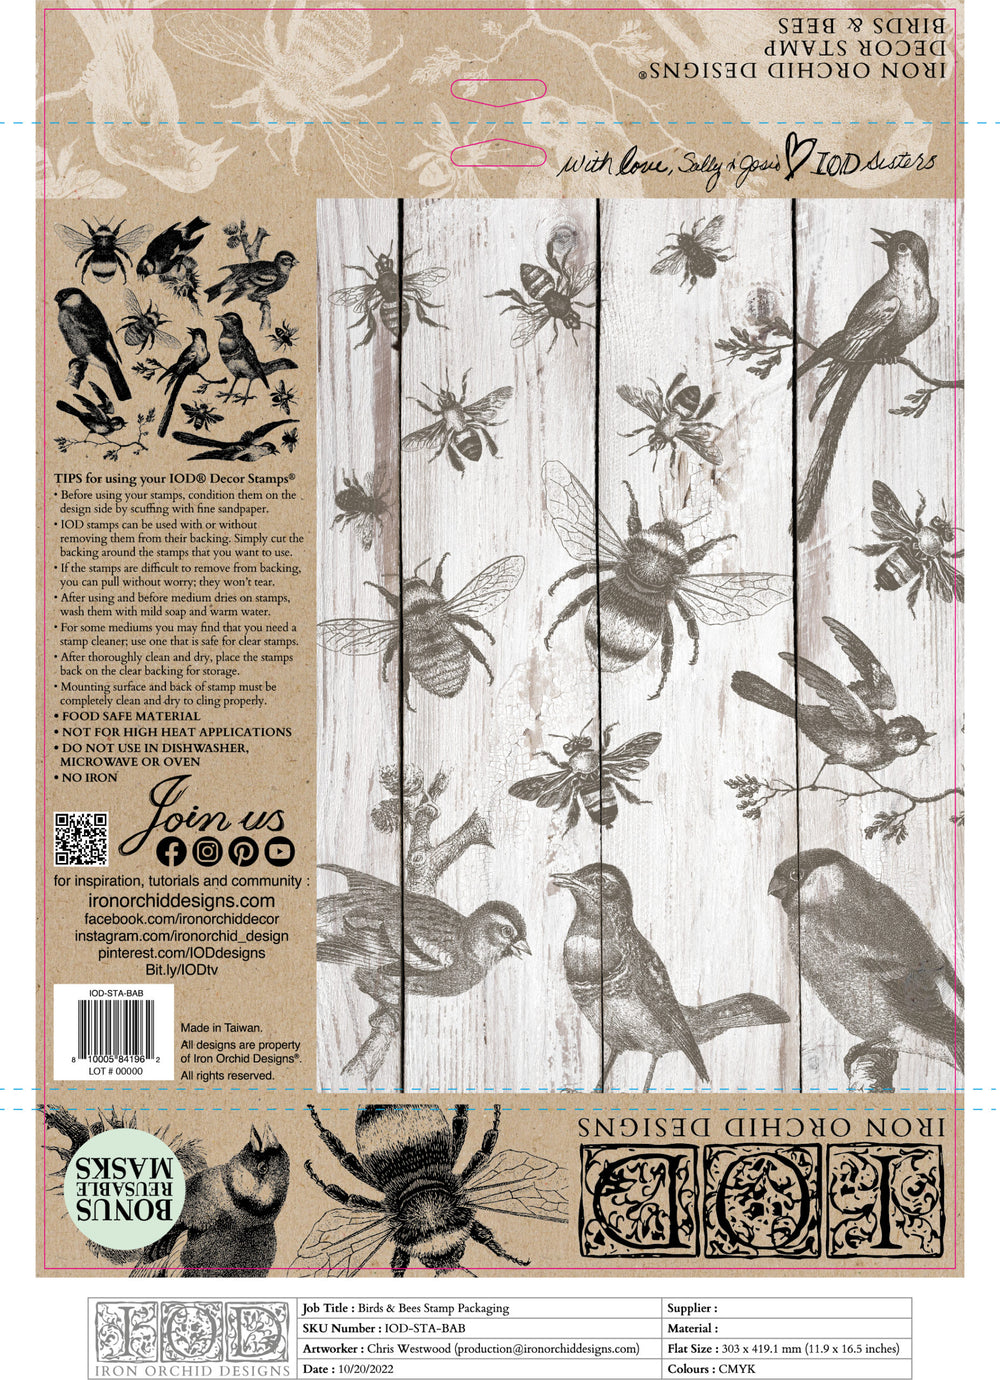 BIRDS & BEES Stamp by IOD (12"x12", 30.48cm x 30.48cm) - Rustic Farmhouse Charm